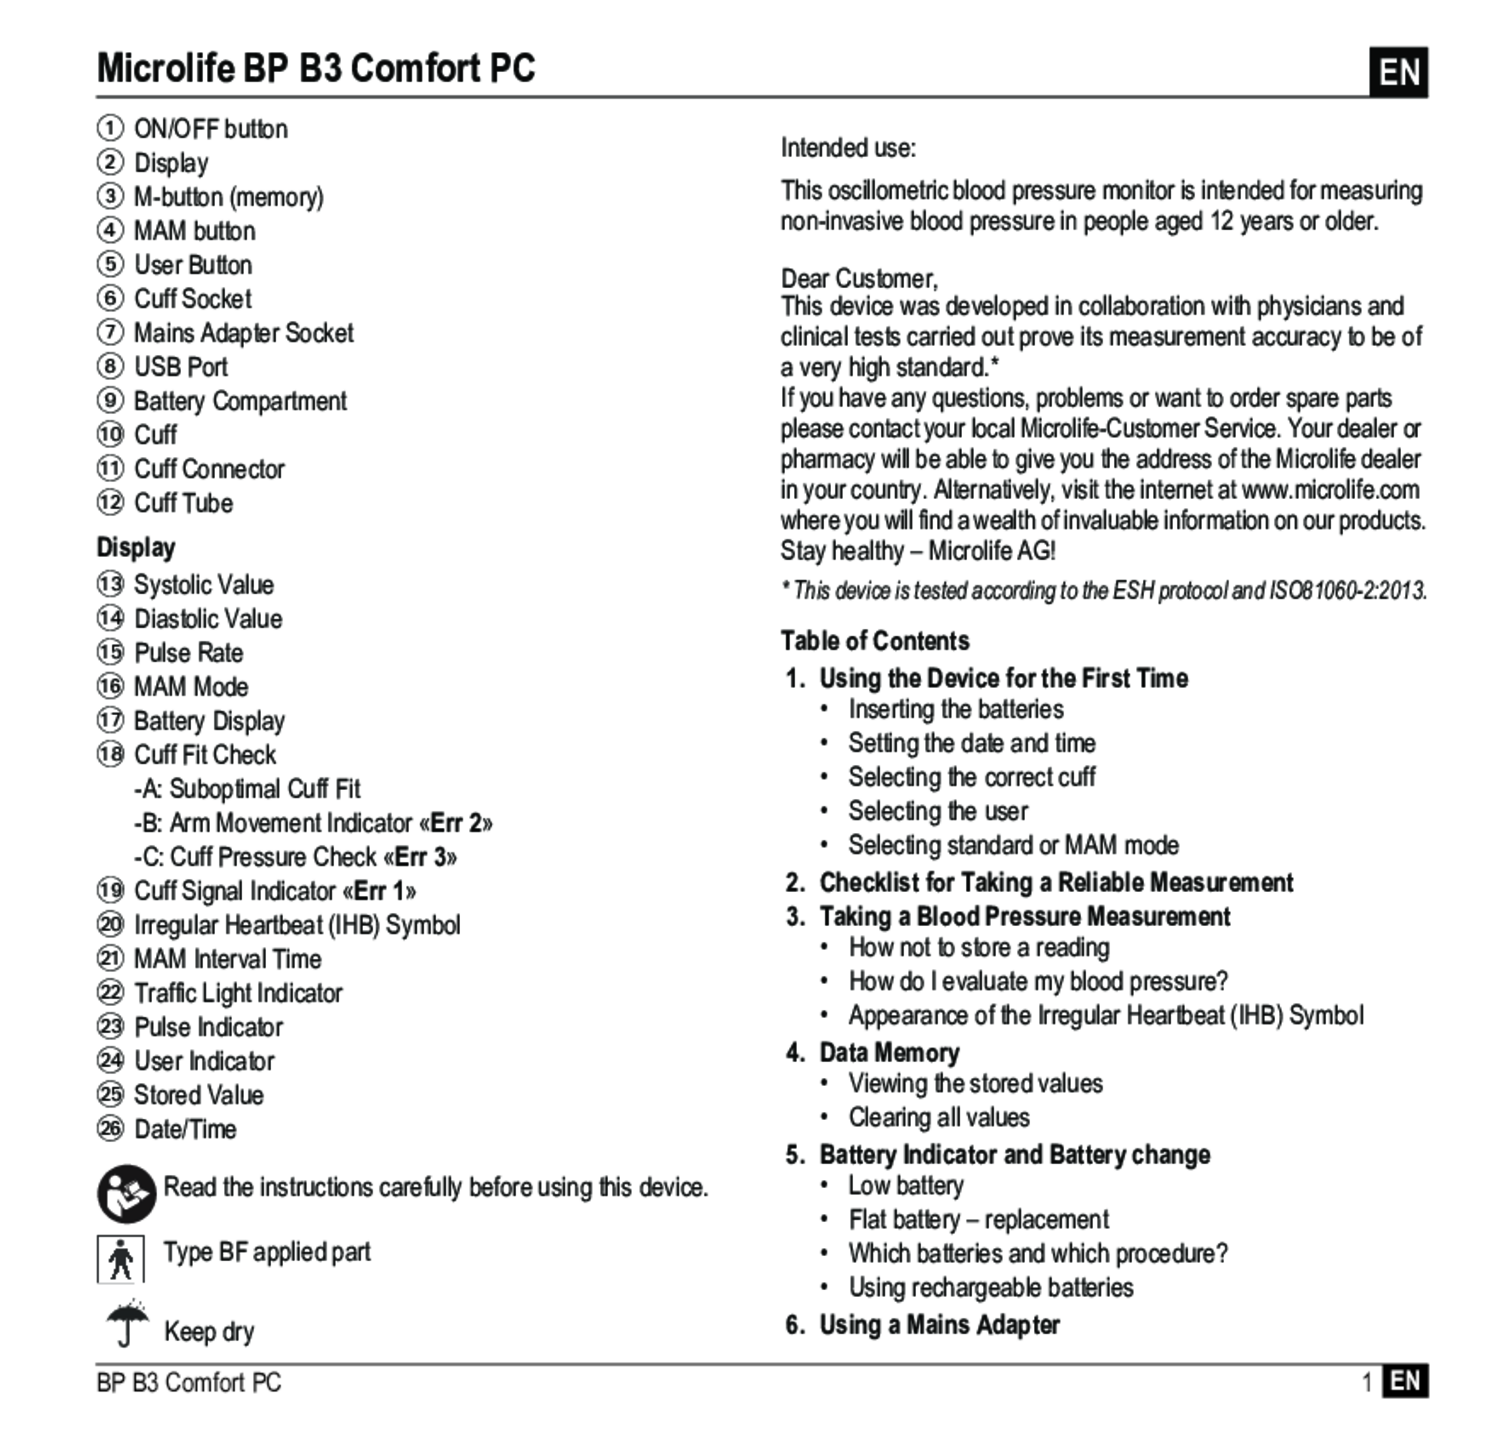 Microlife BP Bloeddrukmeter B3 Comfort PC afbeelding van document #3, gebruiksaanwijzing